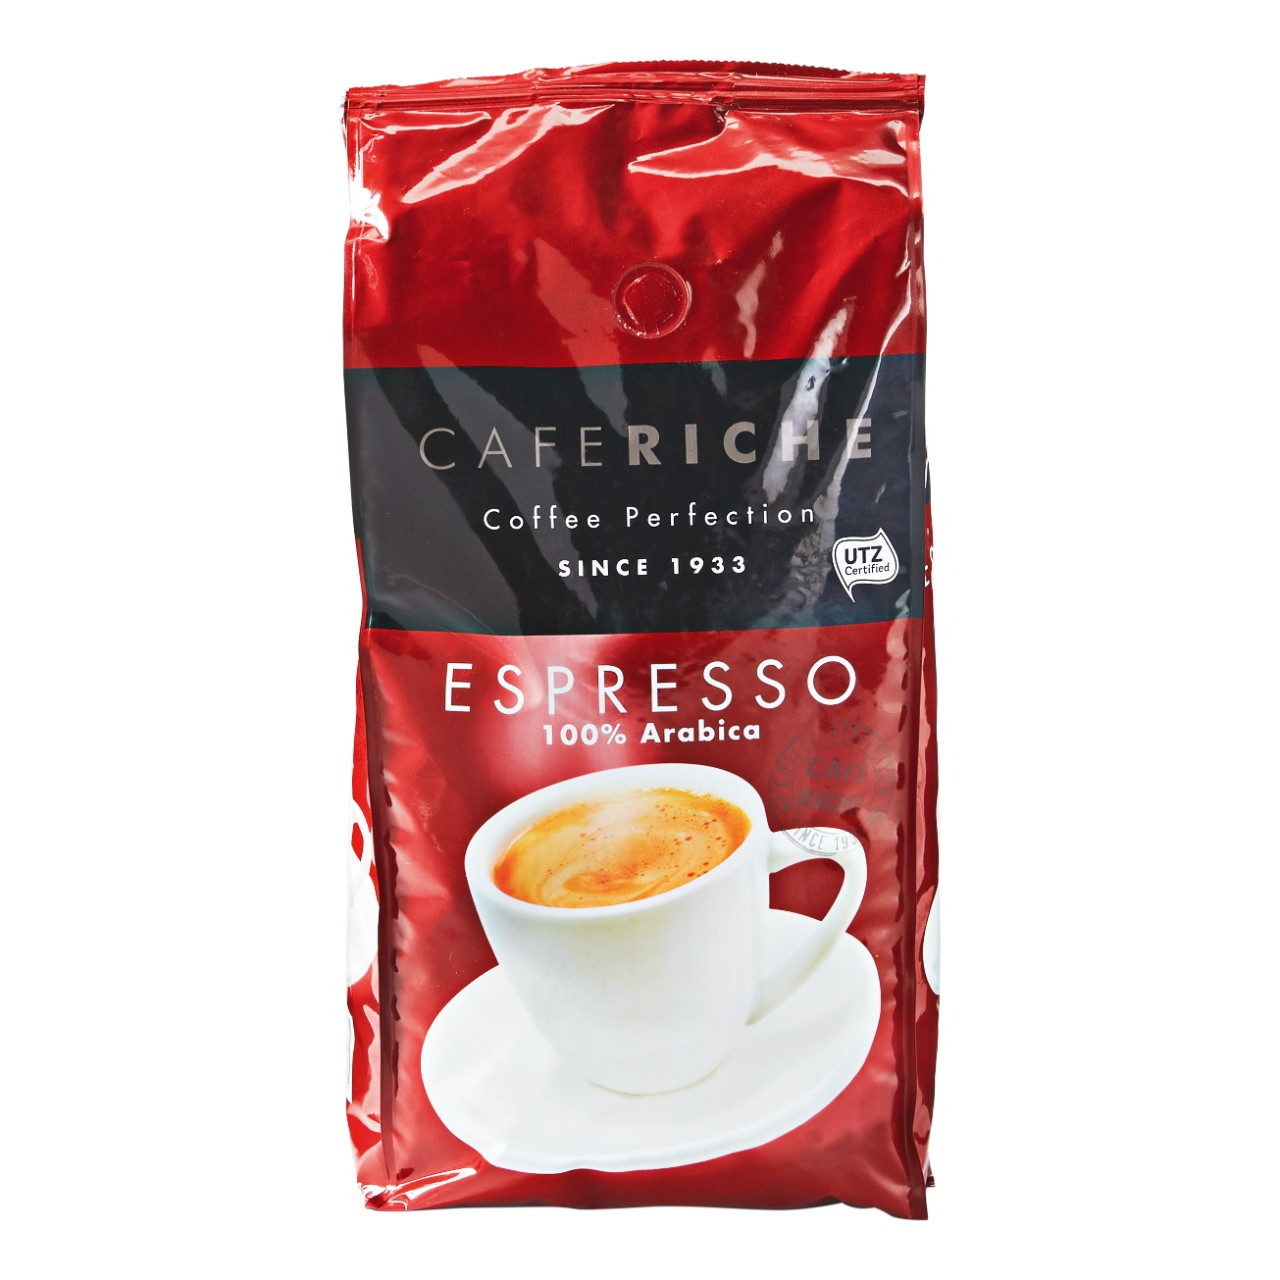 Ongedaan maken afbetalen Vaag Cafe Riche Koffiebonen espresso, UTZ Zak 1 kilo | dekweker.nl